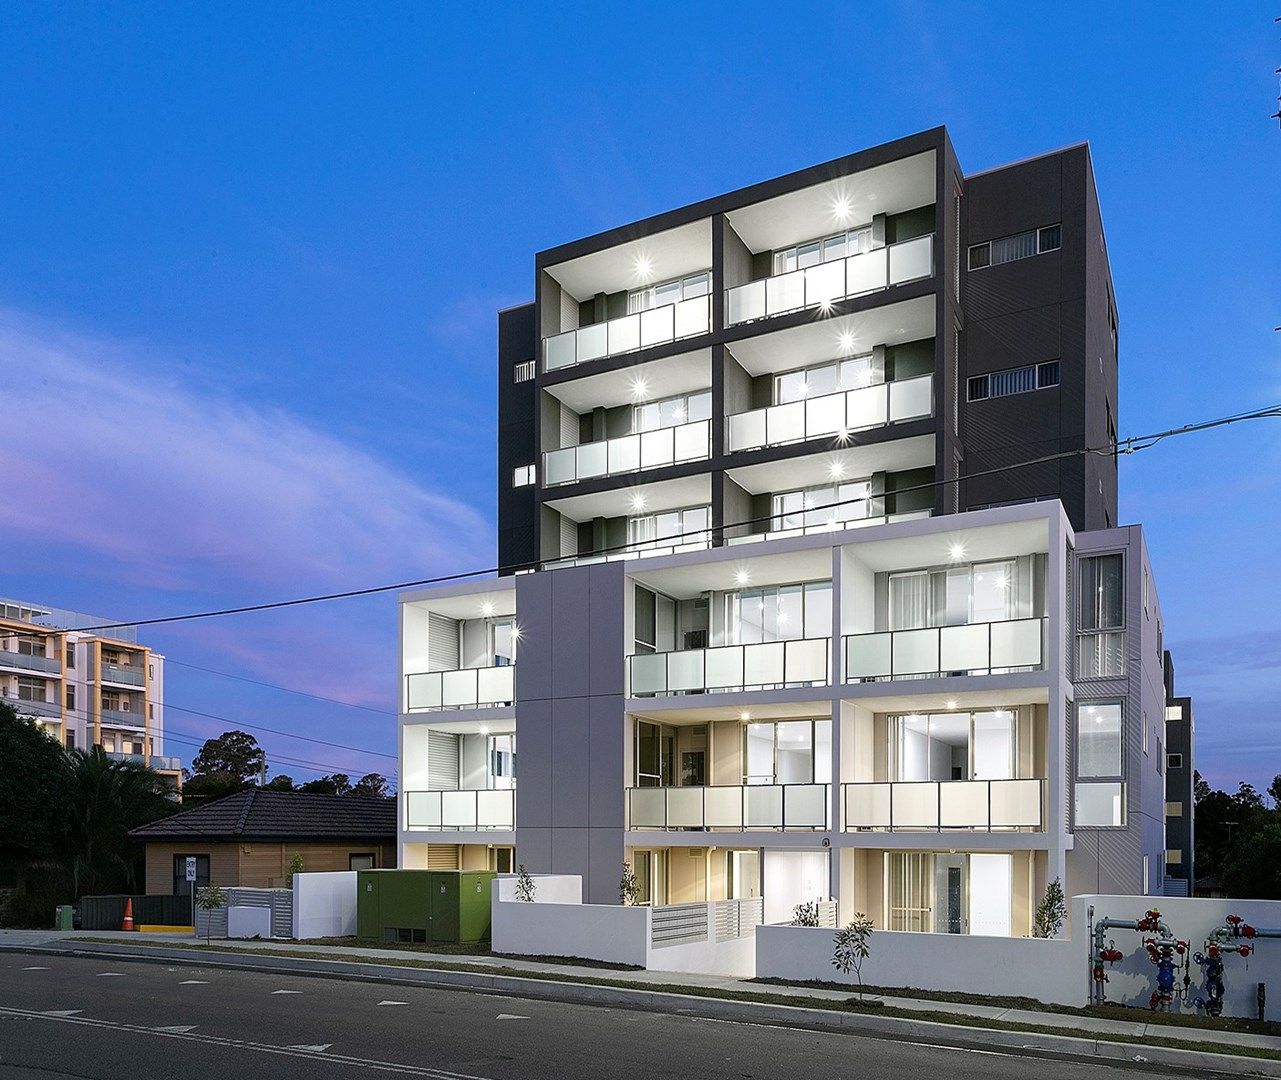 2 bedrooms Apartment / Unit / Flat in 8/42-44 Lethbridge Street PENRITH NSW, 2750